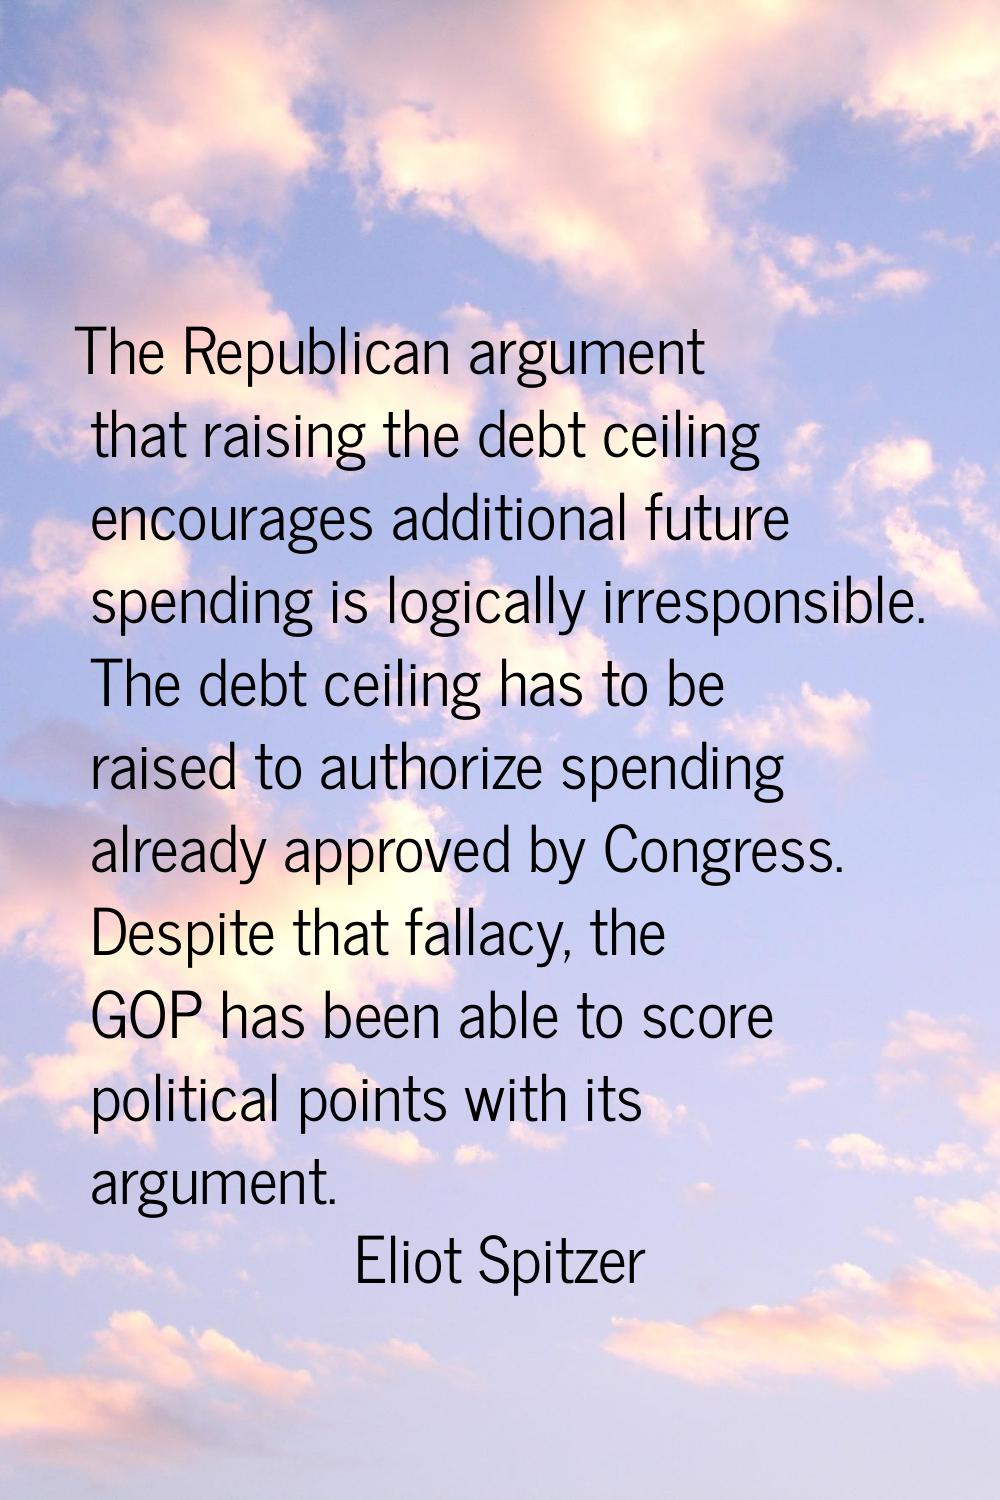 The Republican argument that raising the debt ceiling encourages additional future spending is logi